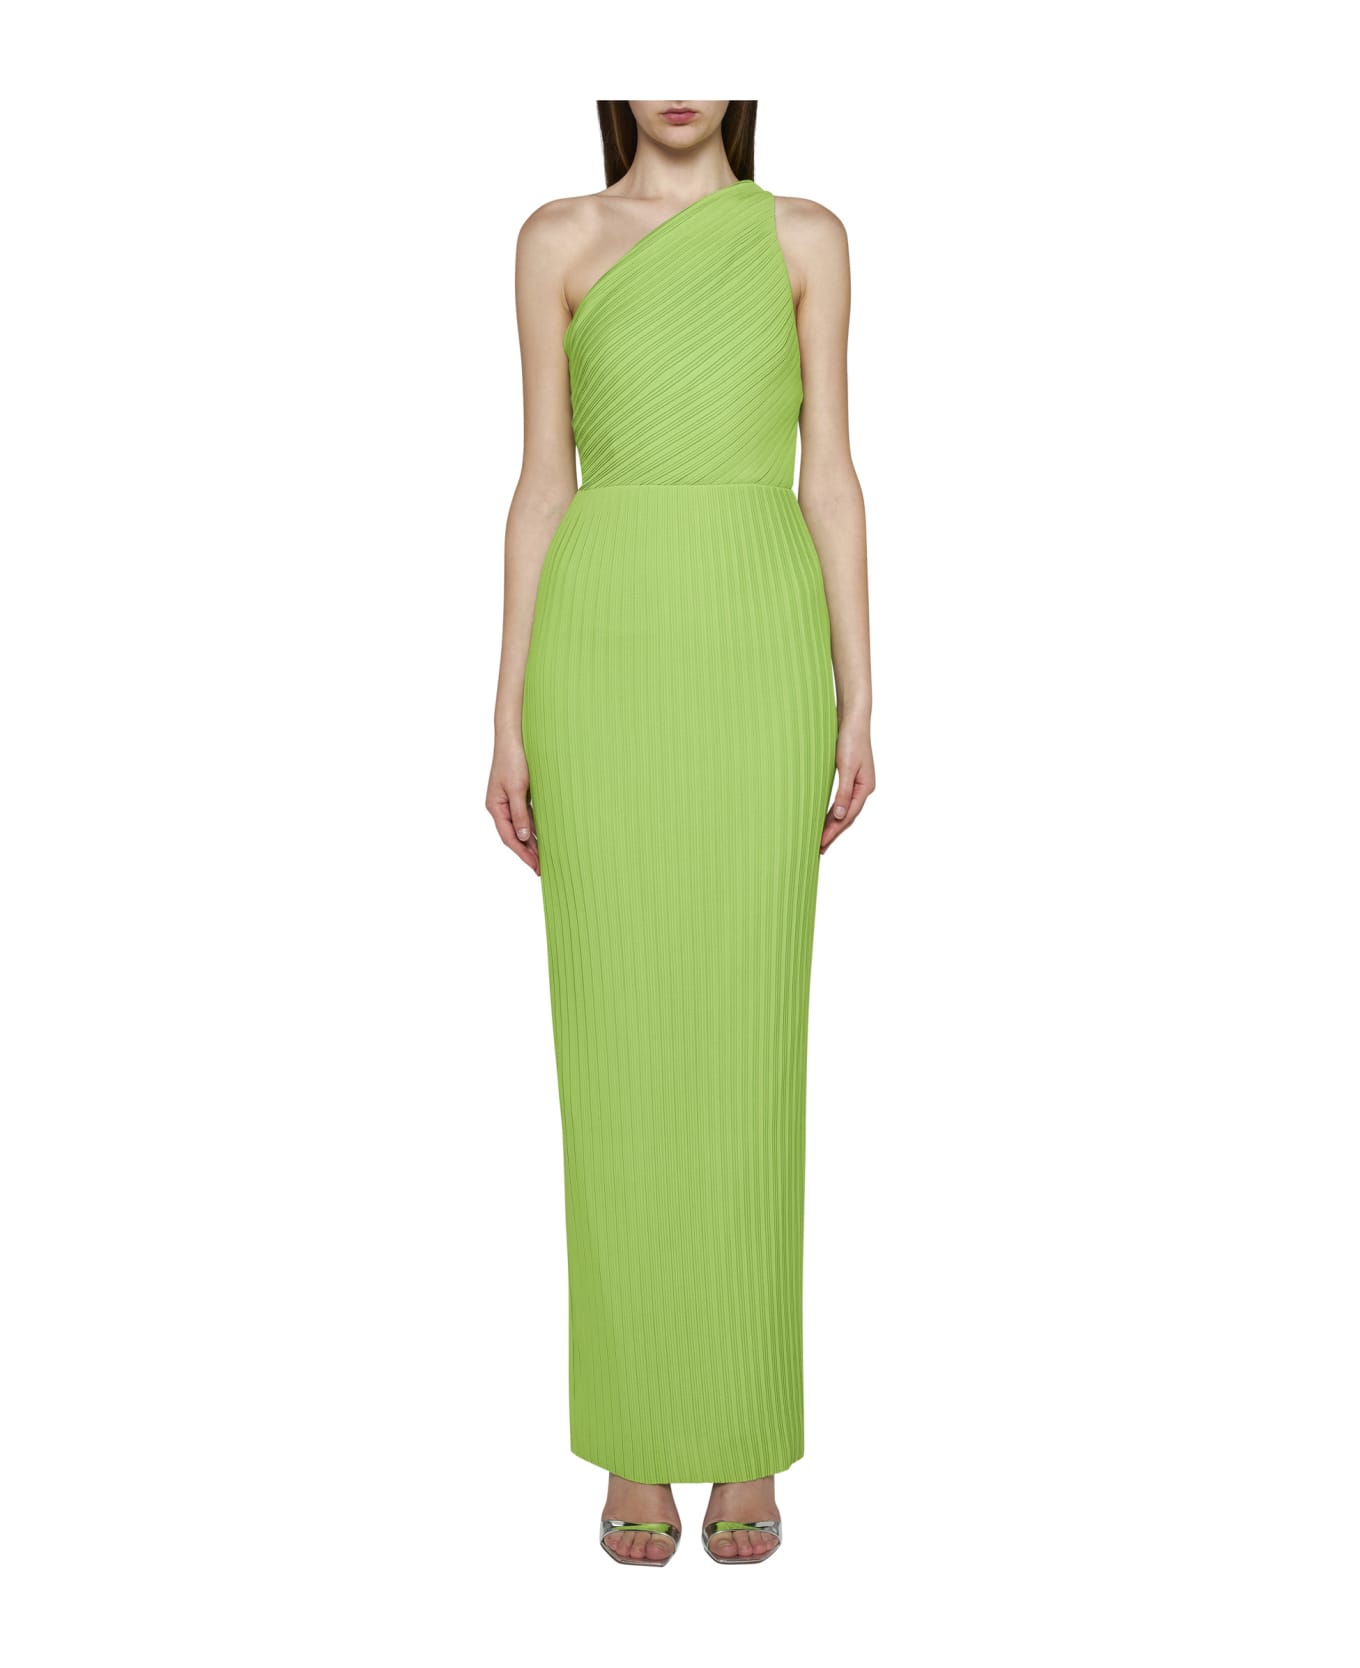 Solace London Dress - Green